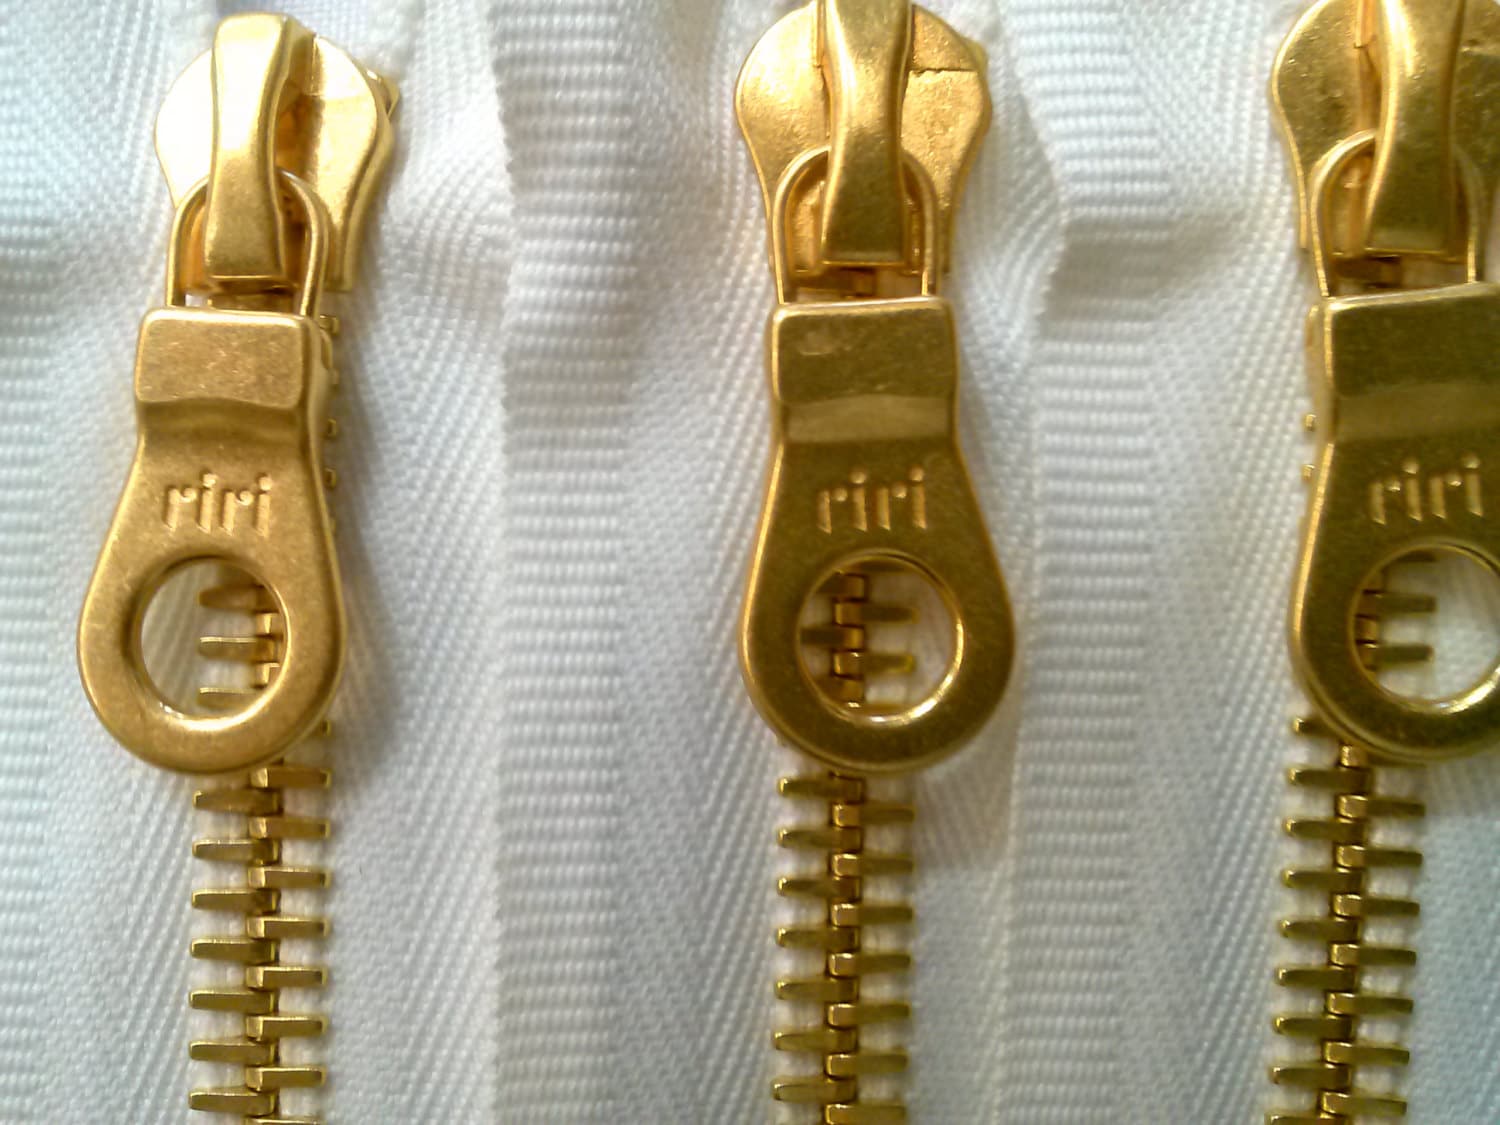 Riri Zipper 7 Inches 8mm Gold Teeth Closed Bottom